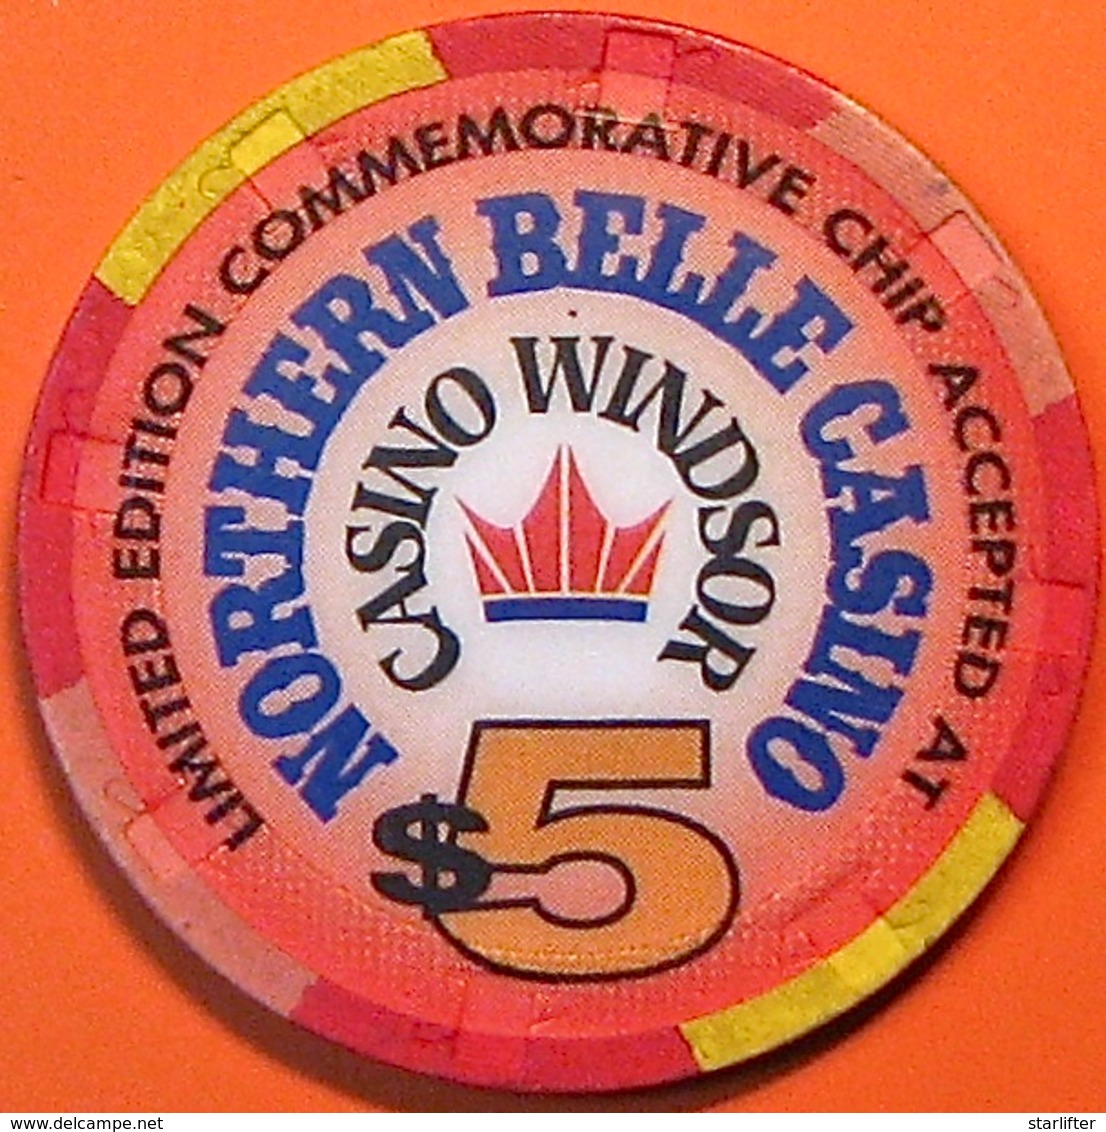 $5 Casino Chip. Northern Belle, Ontario, Canada. M98. - Casino